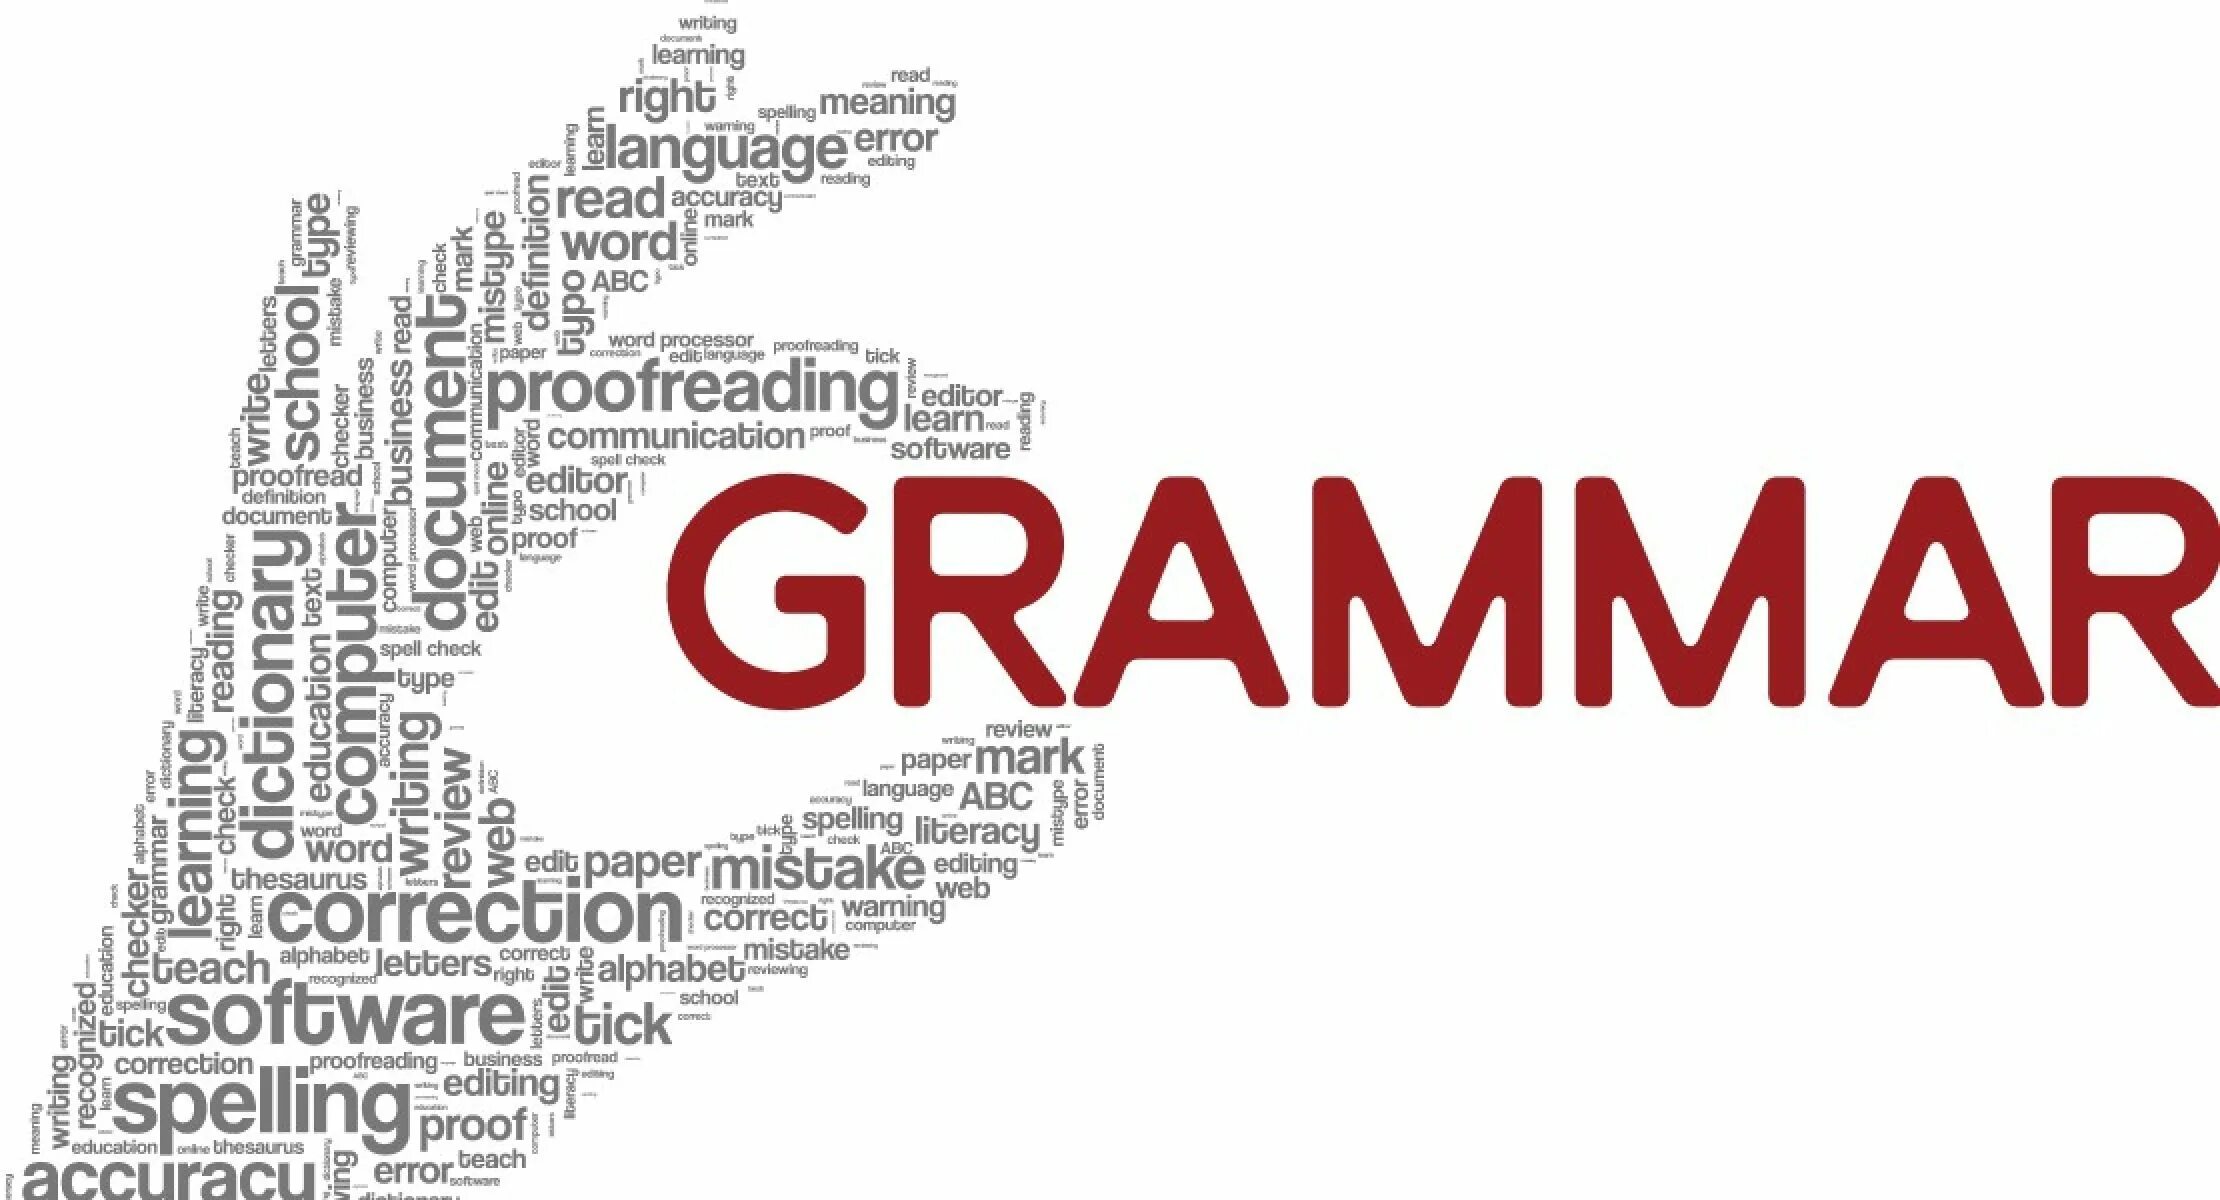 Mark your words. Grammar картинки. English Grammar. English Grammar картинки. Английская грамматика для презентации.